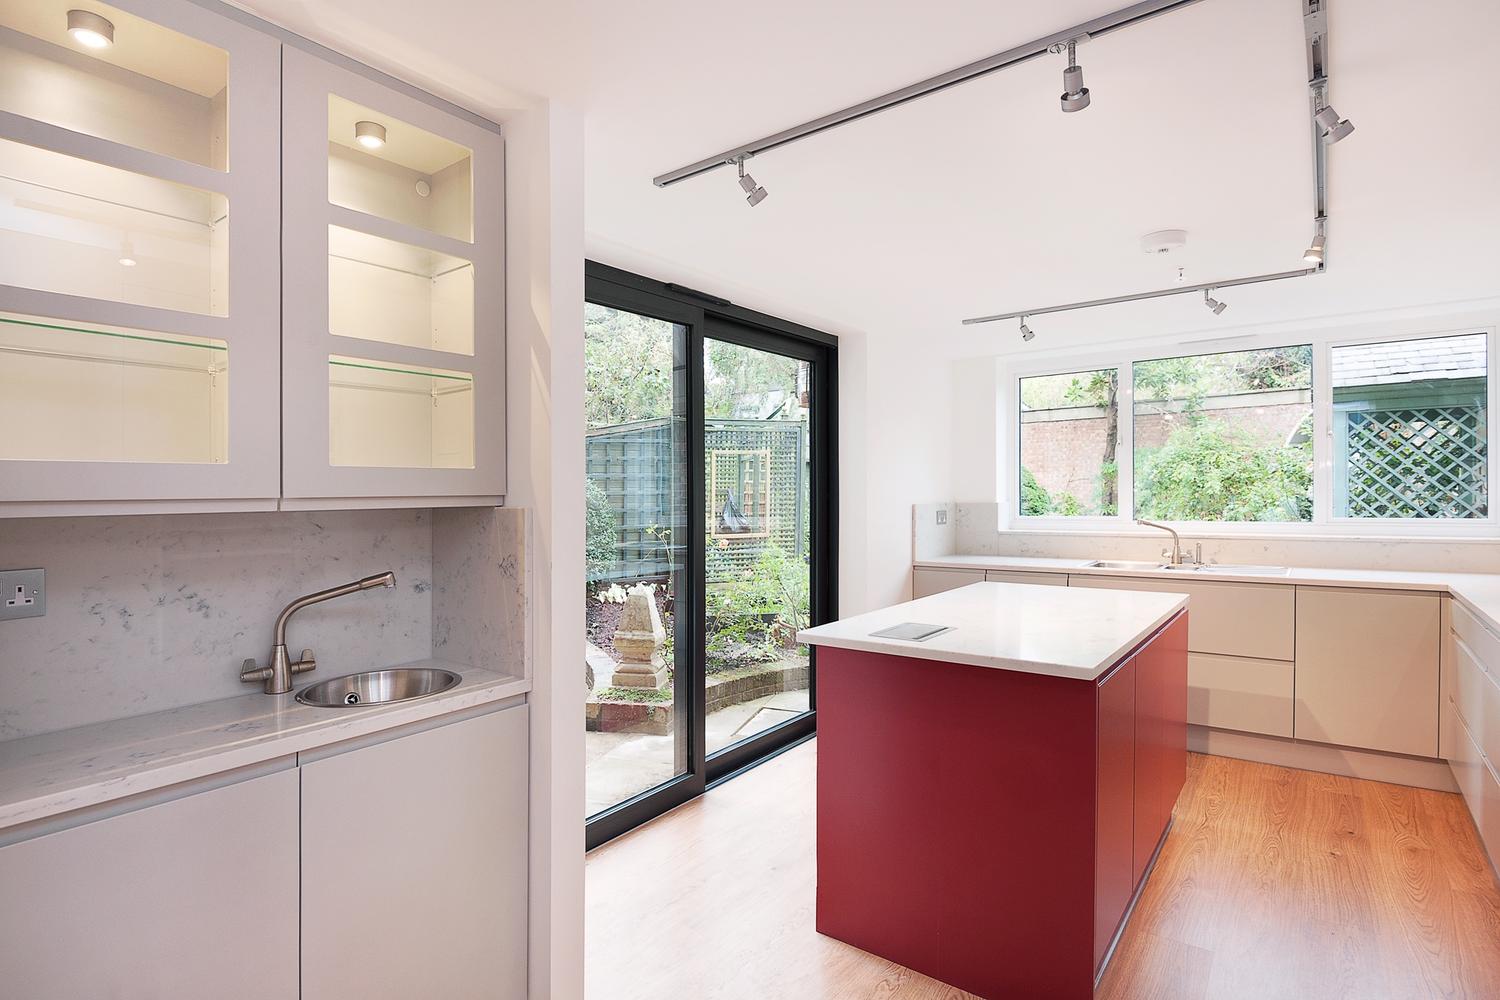 Elegant bespoke kitchen design with a door open to garden